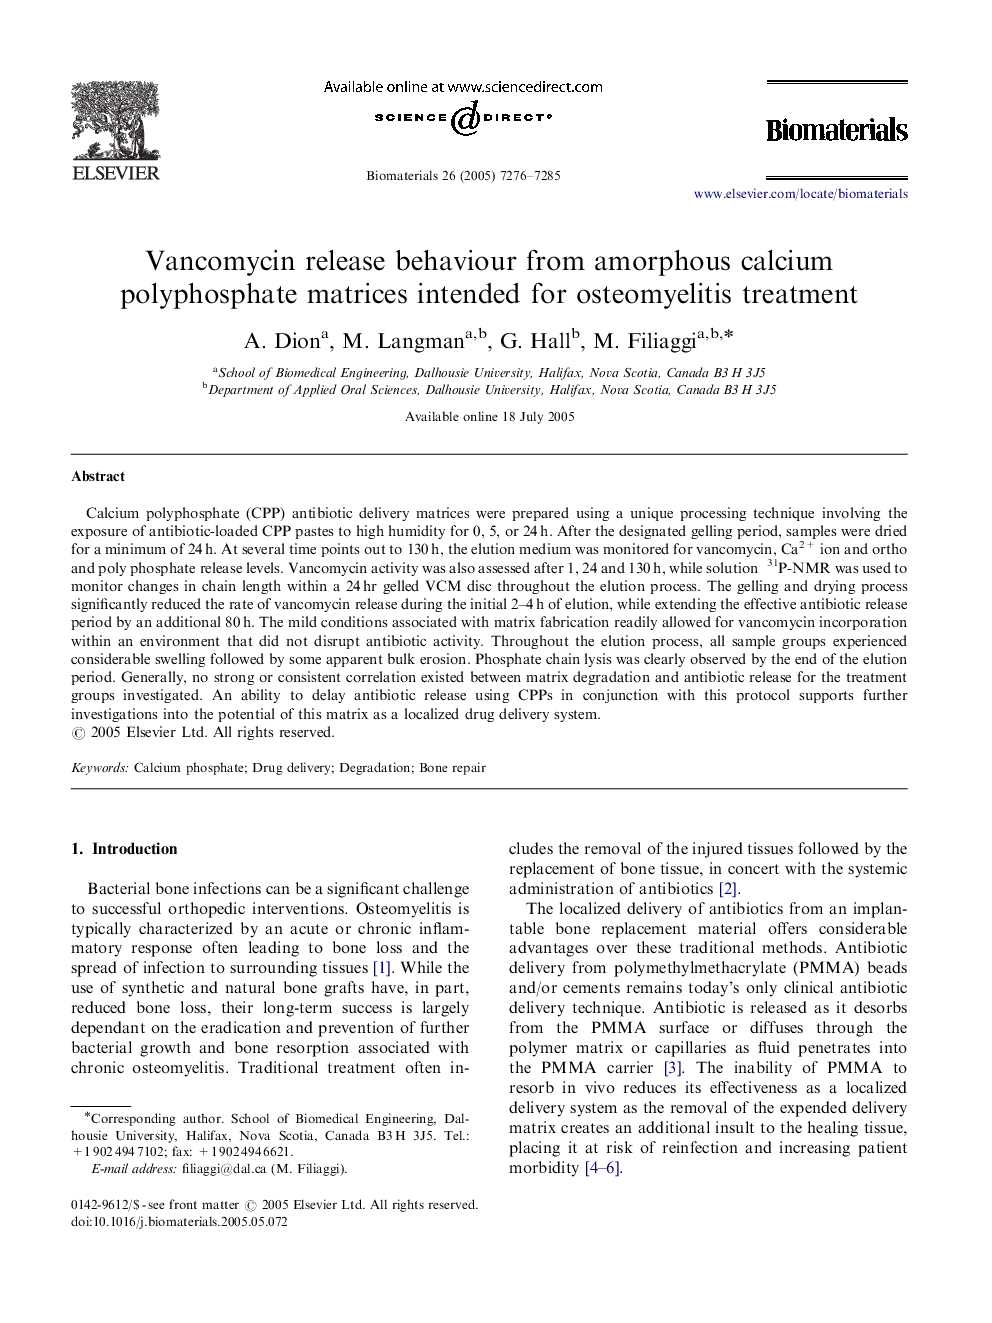 Vancomycin release behaviour from amorphous calcium polyphosphate matrices intended for osteomyelitis treatment